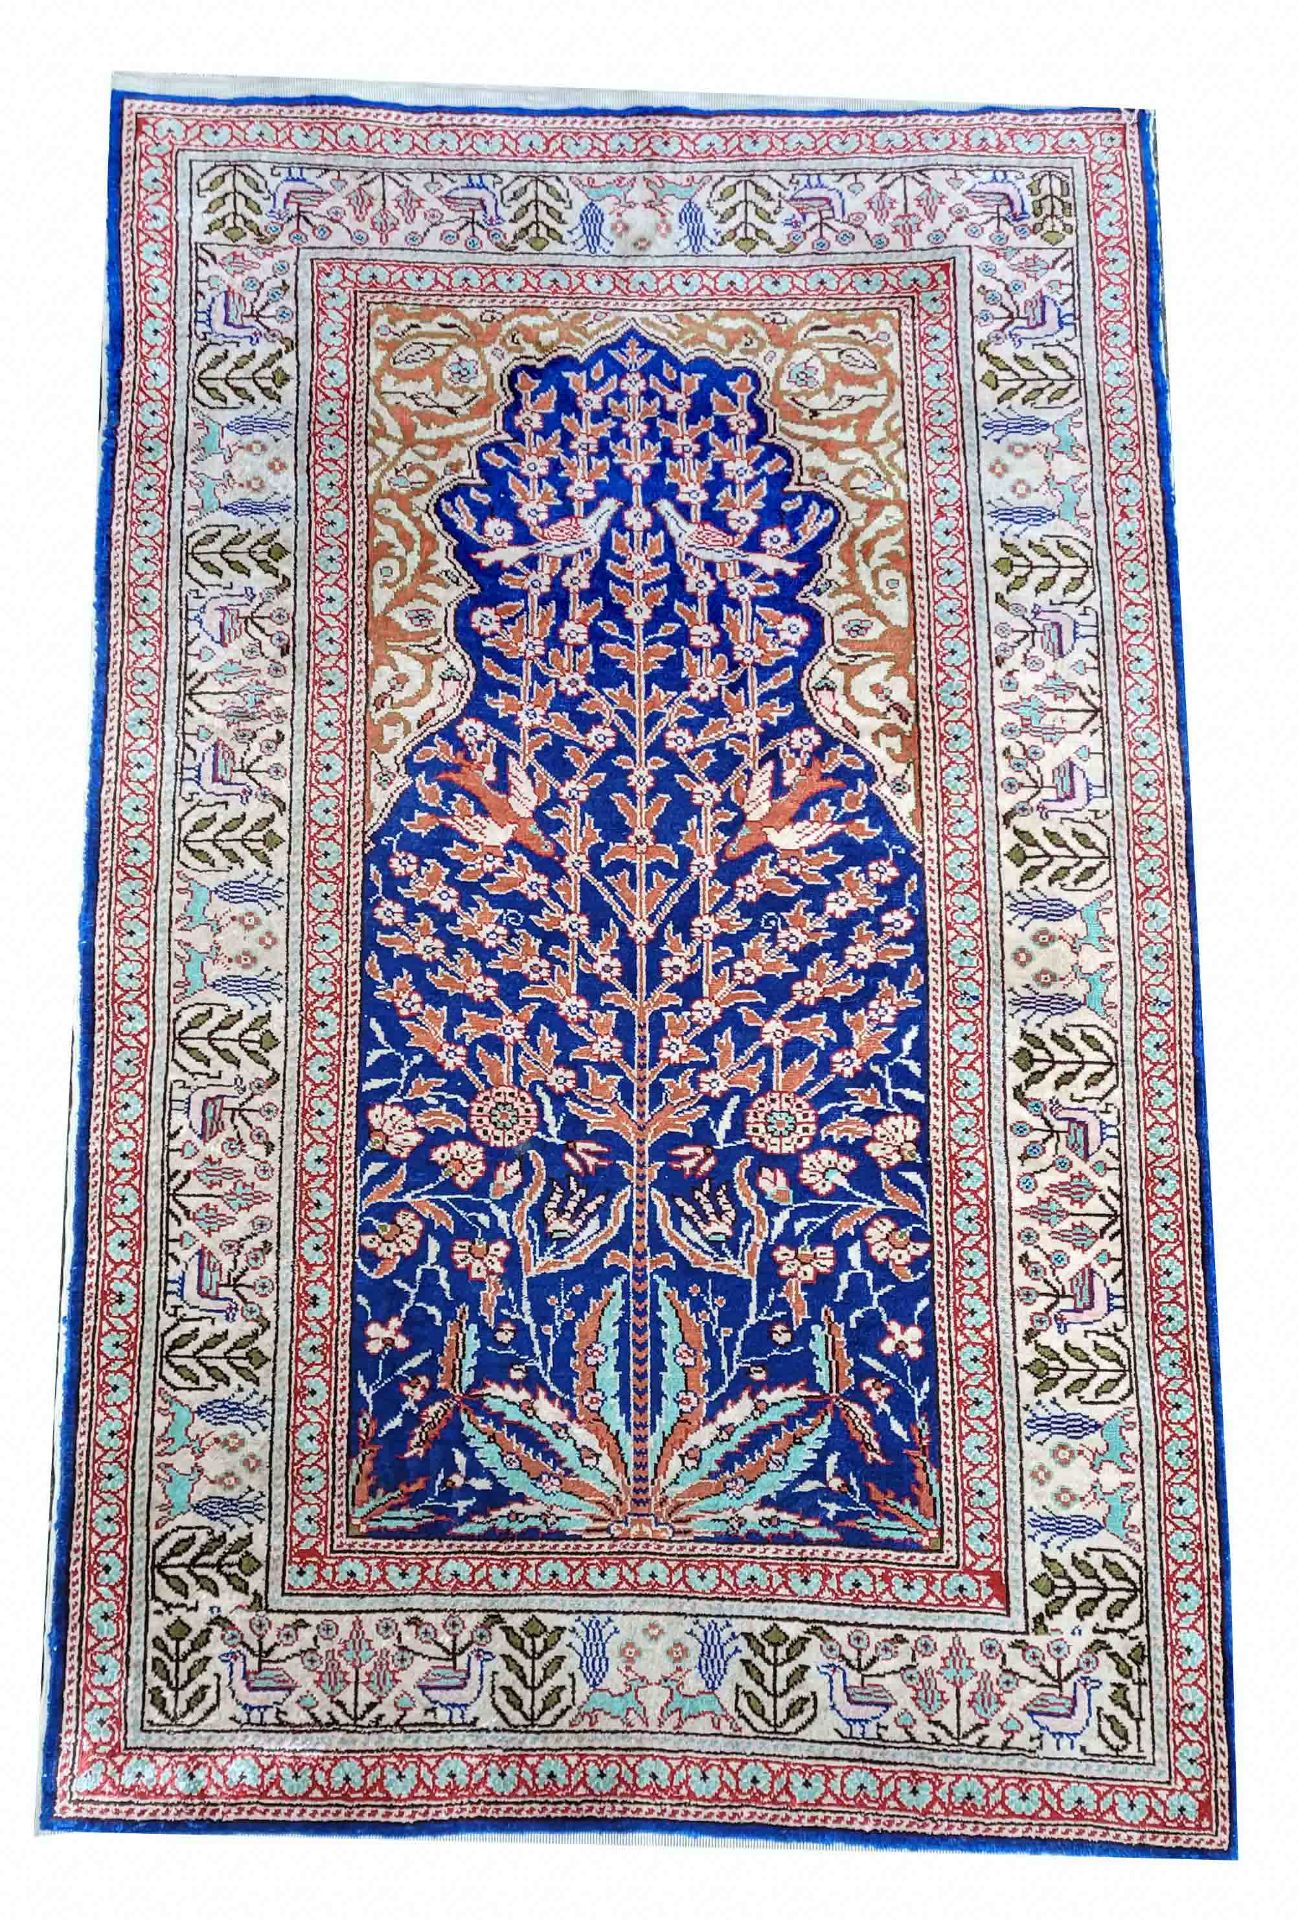 Teppich (prayer rug), silk, go